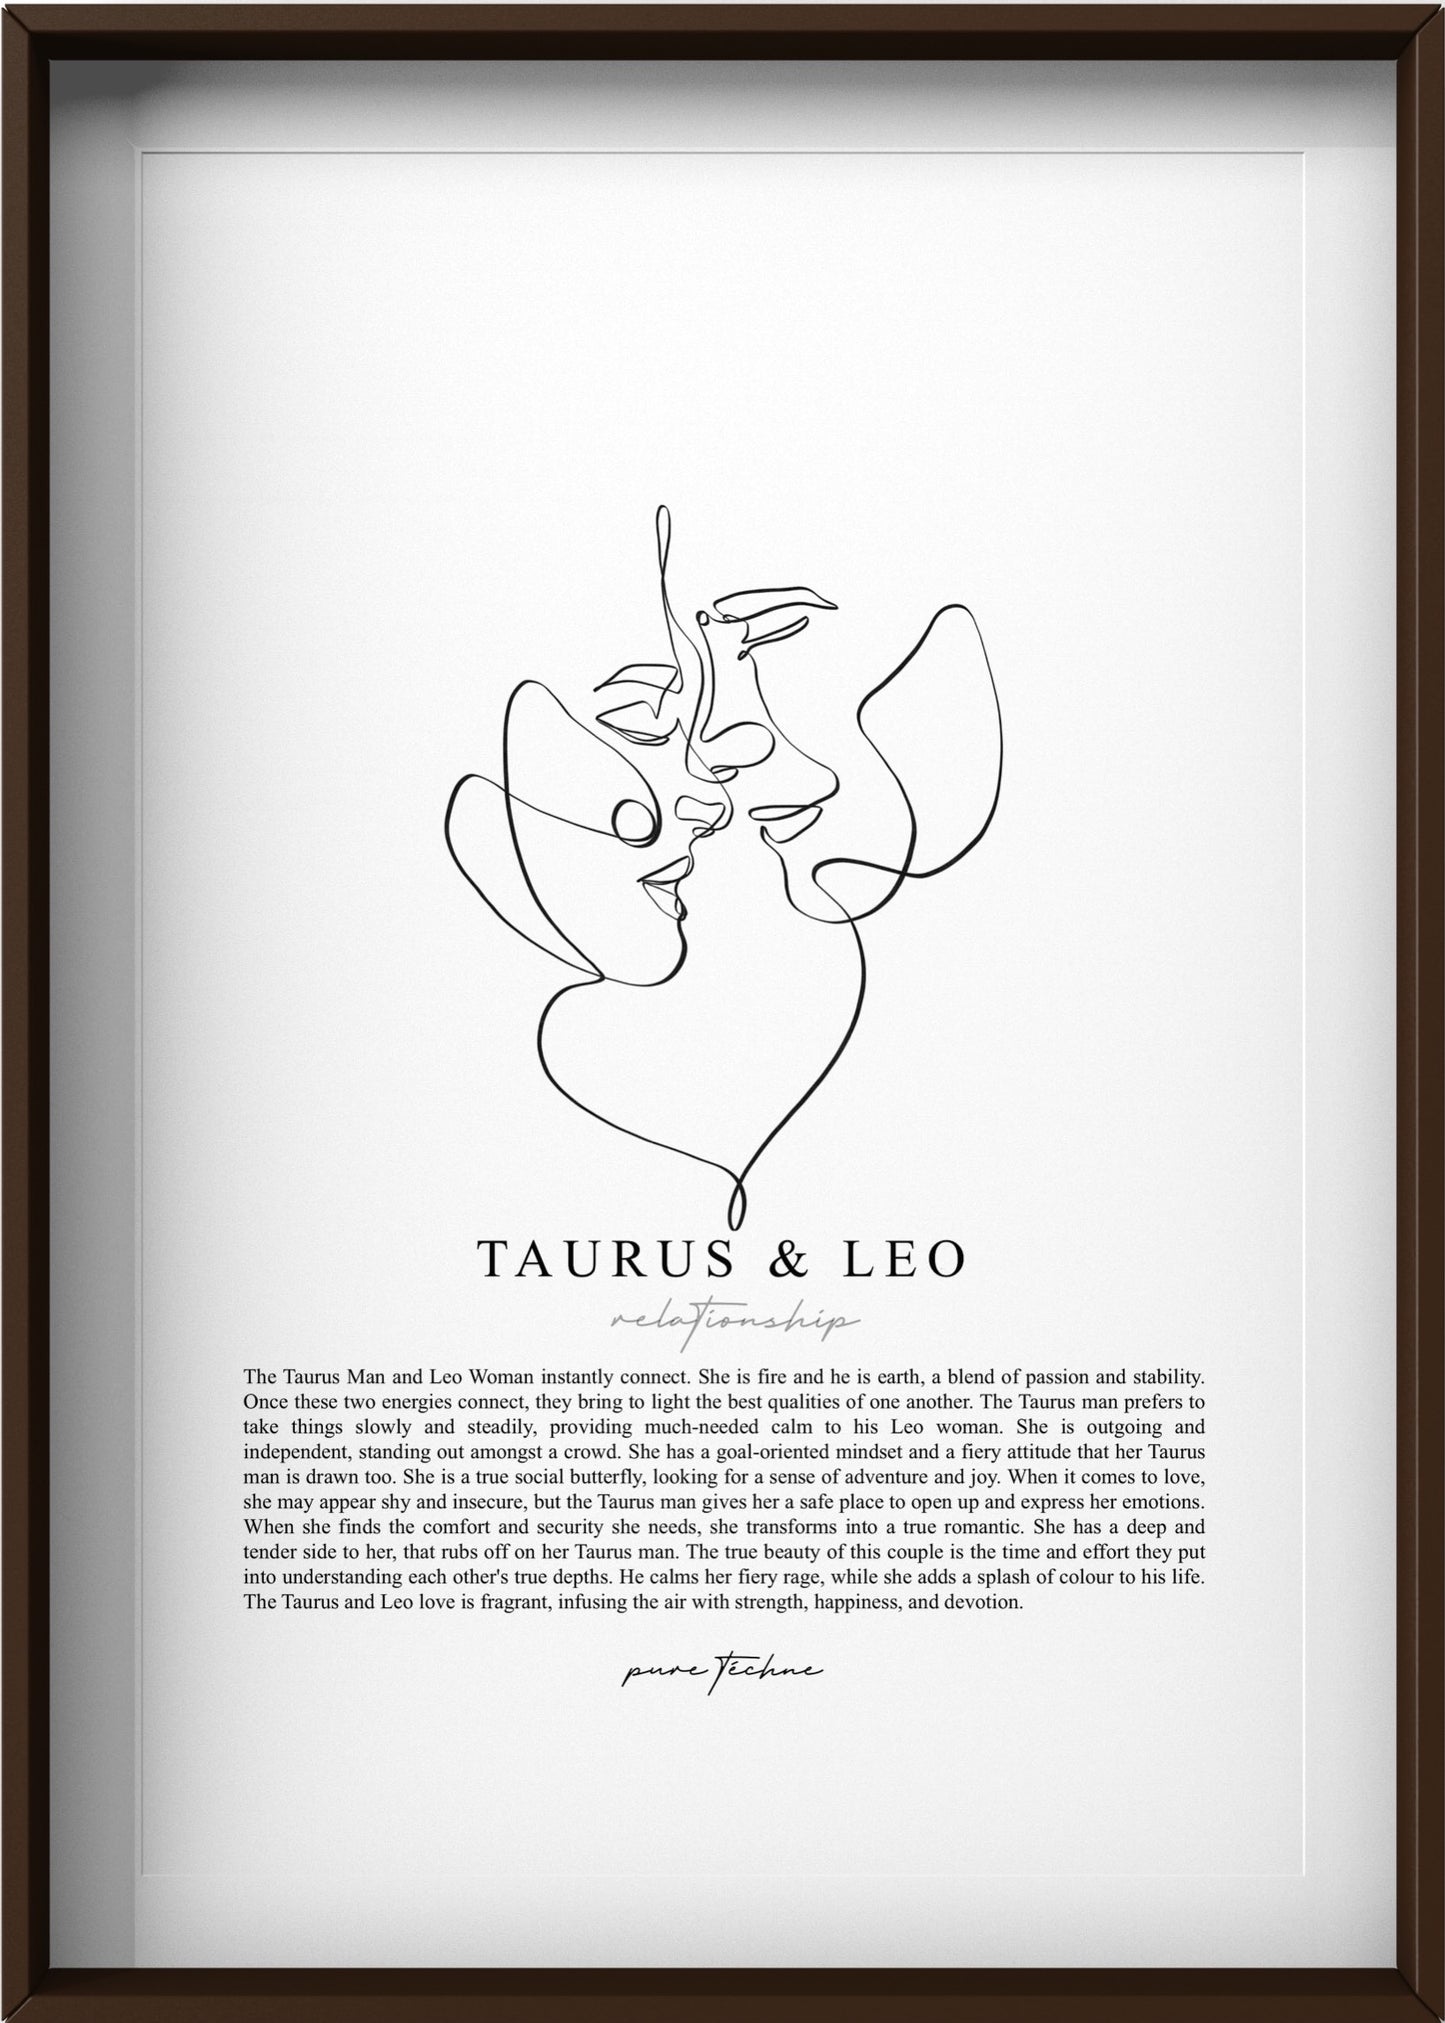 Taurus Man & Leo Woman